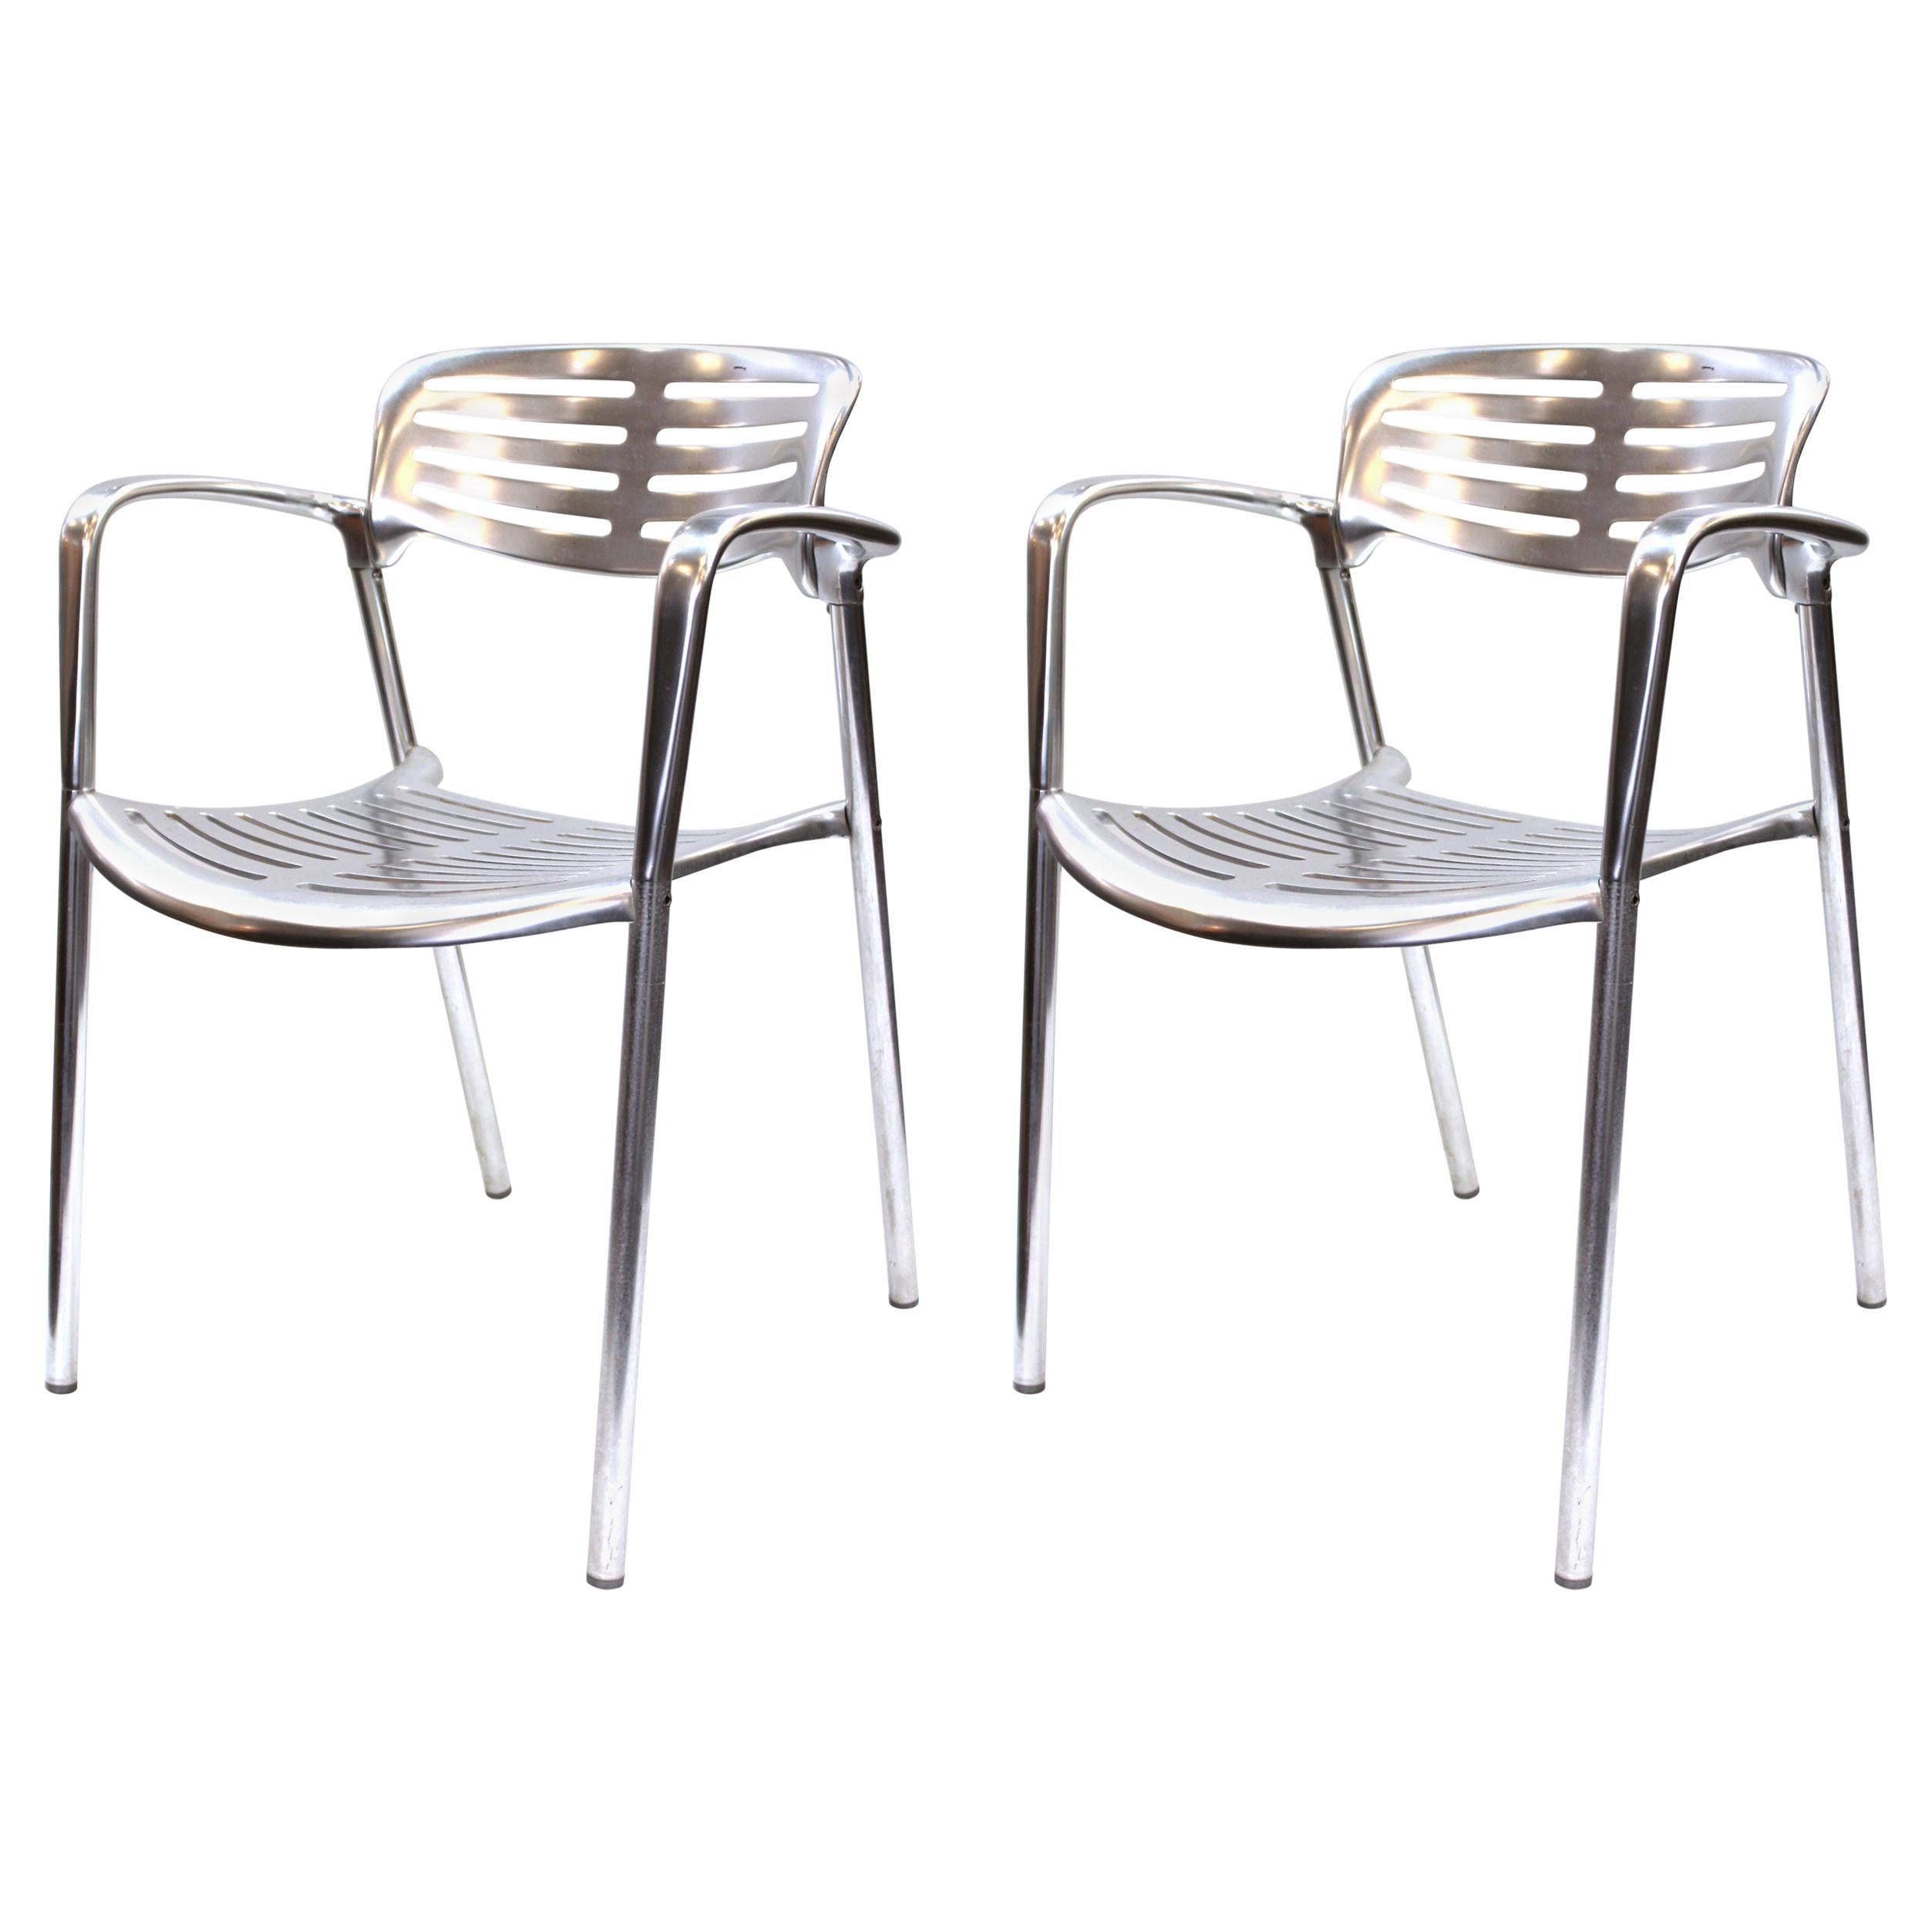 Jorge Pensi for Knoll Modern Aluminum 'Toledo' Chairs